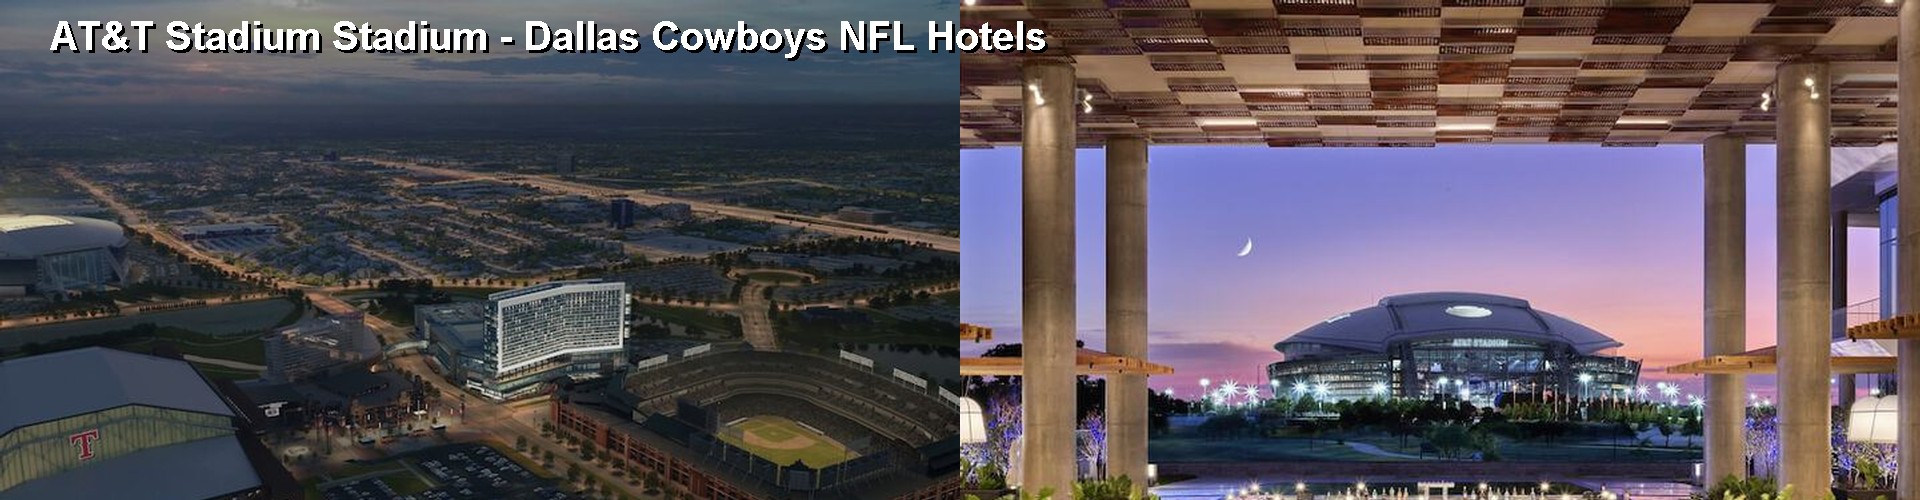 5 Best Hotels near AT&T Stadium Stadium - Dallas Cowboys NFL